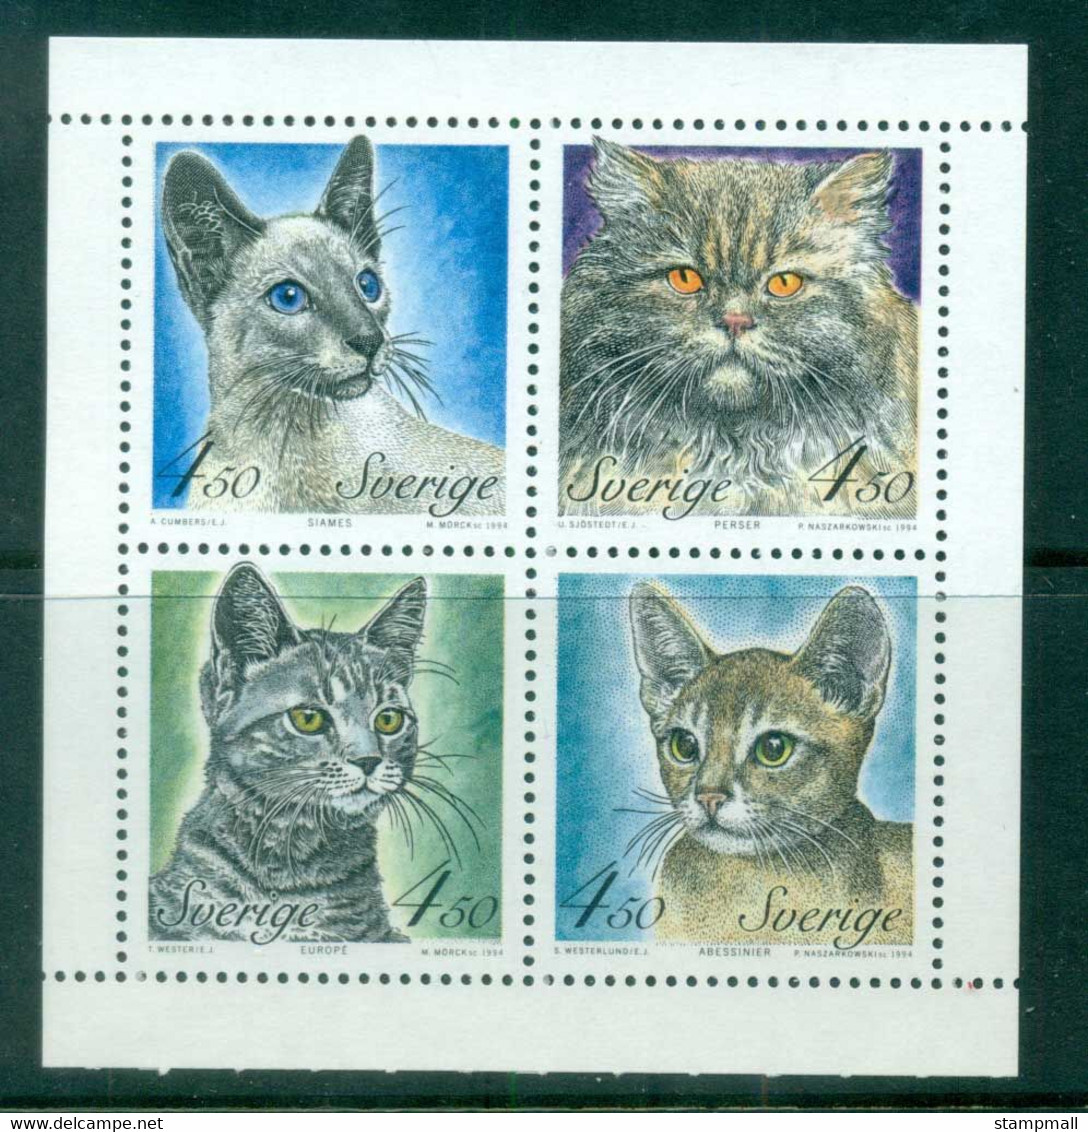 Sweden 1994 Cats Booklet Pane MUH Lot84186 - Neufs